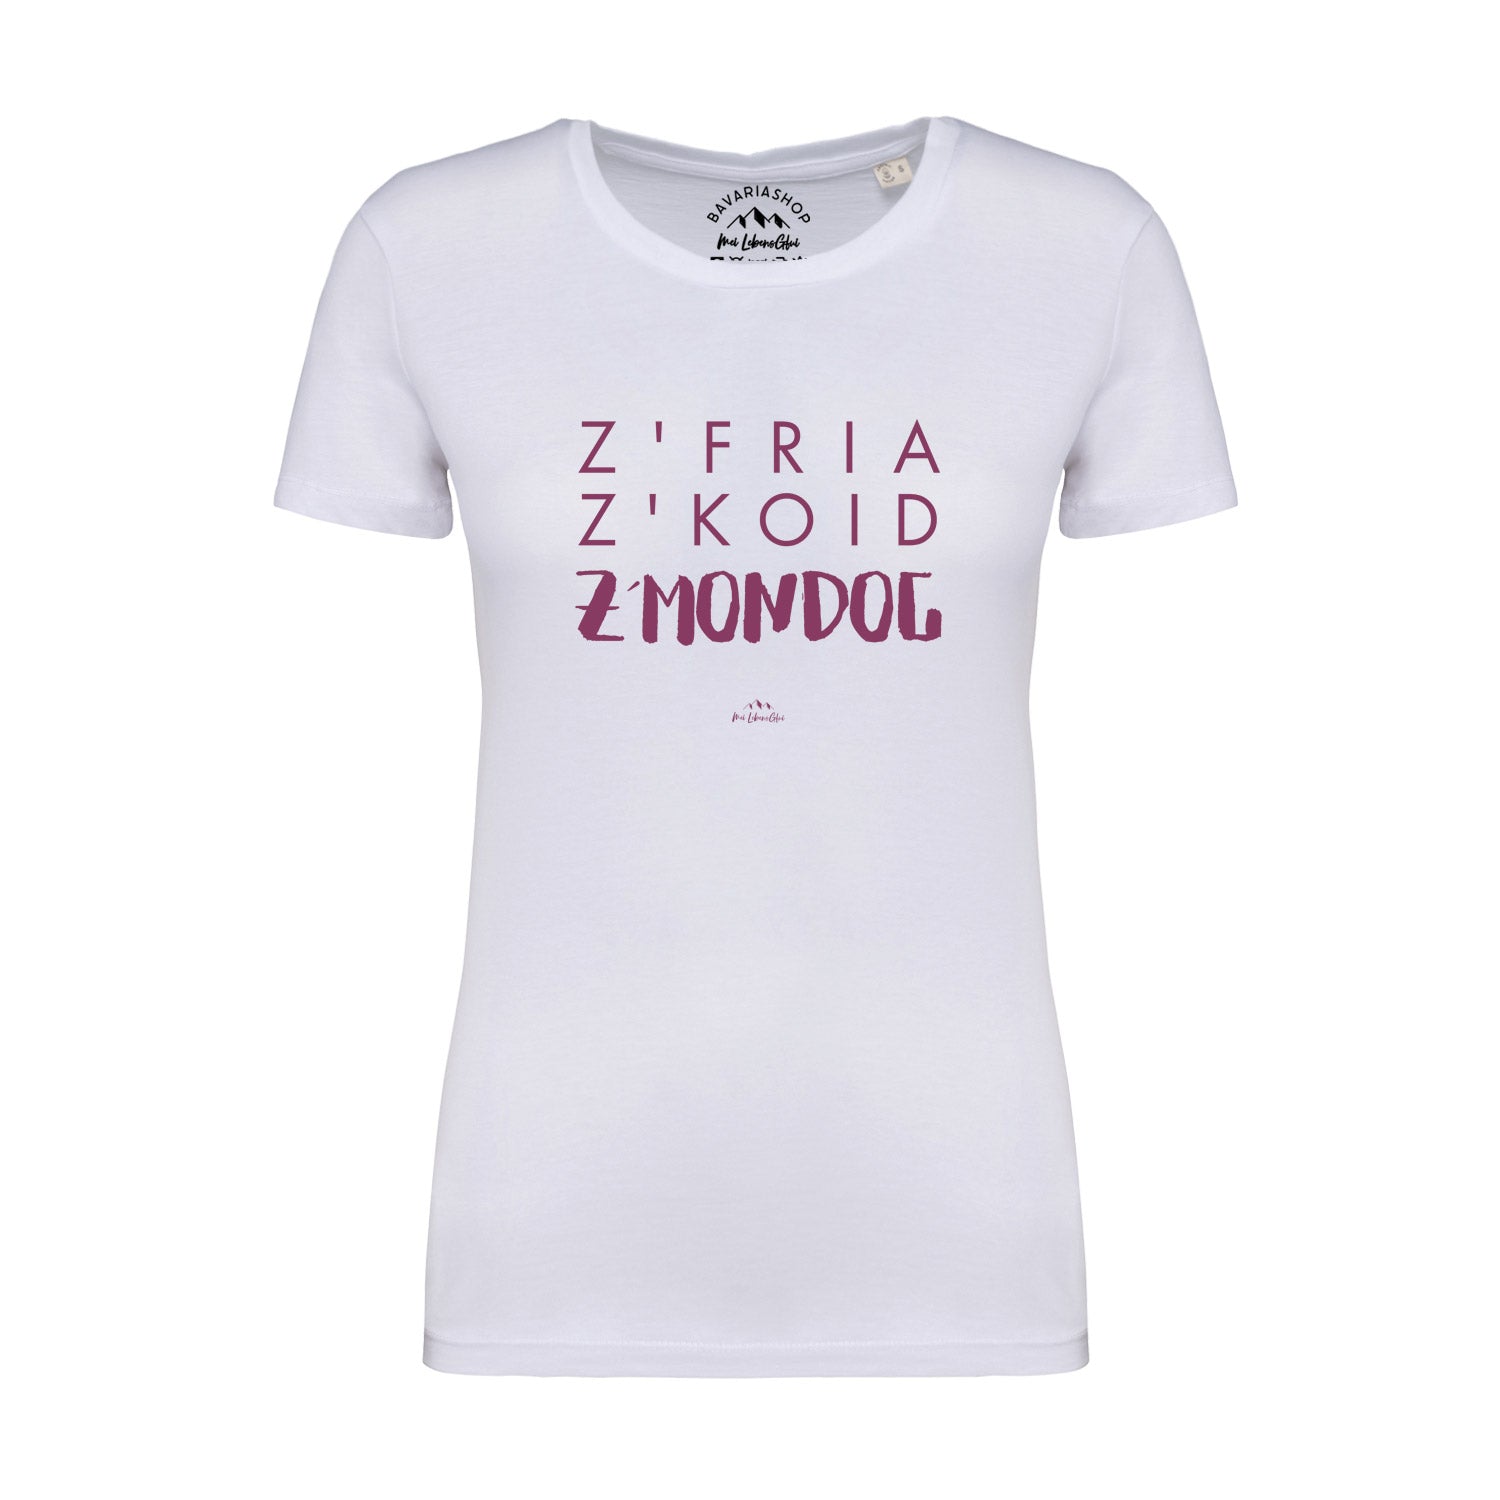 Damen T-Shirt "Z'fria z'koid z'Mondog..."